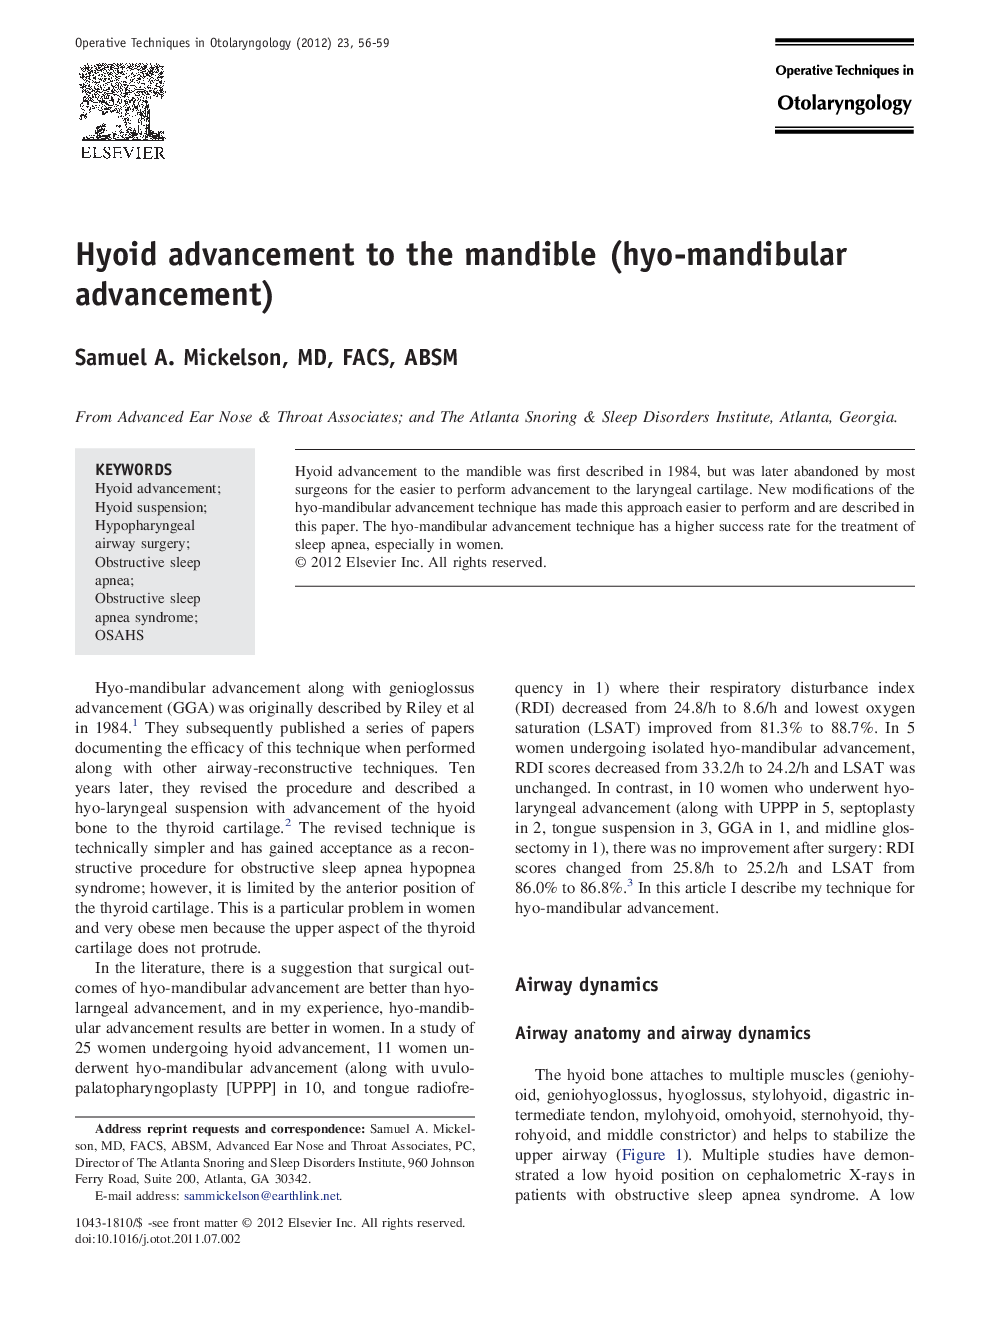 Hyoid advancement to the mandible (hyo-mandibular advancement)